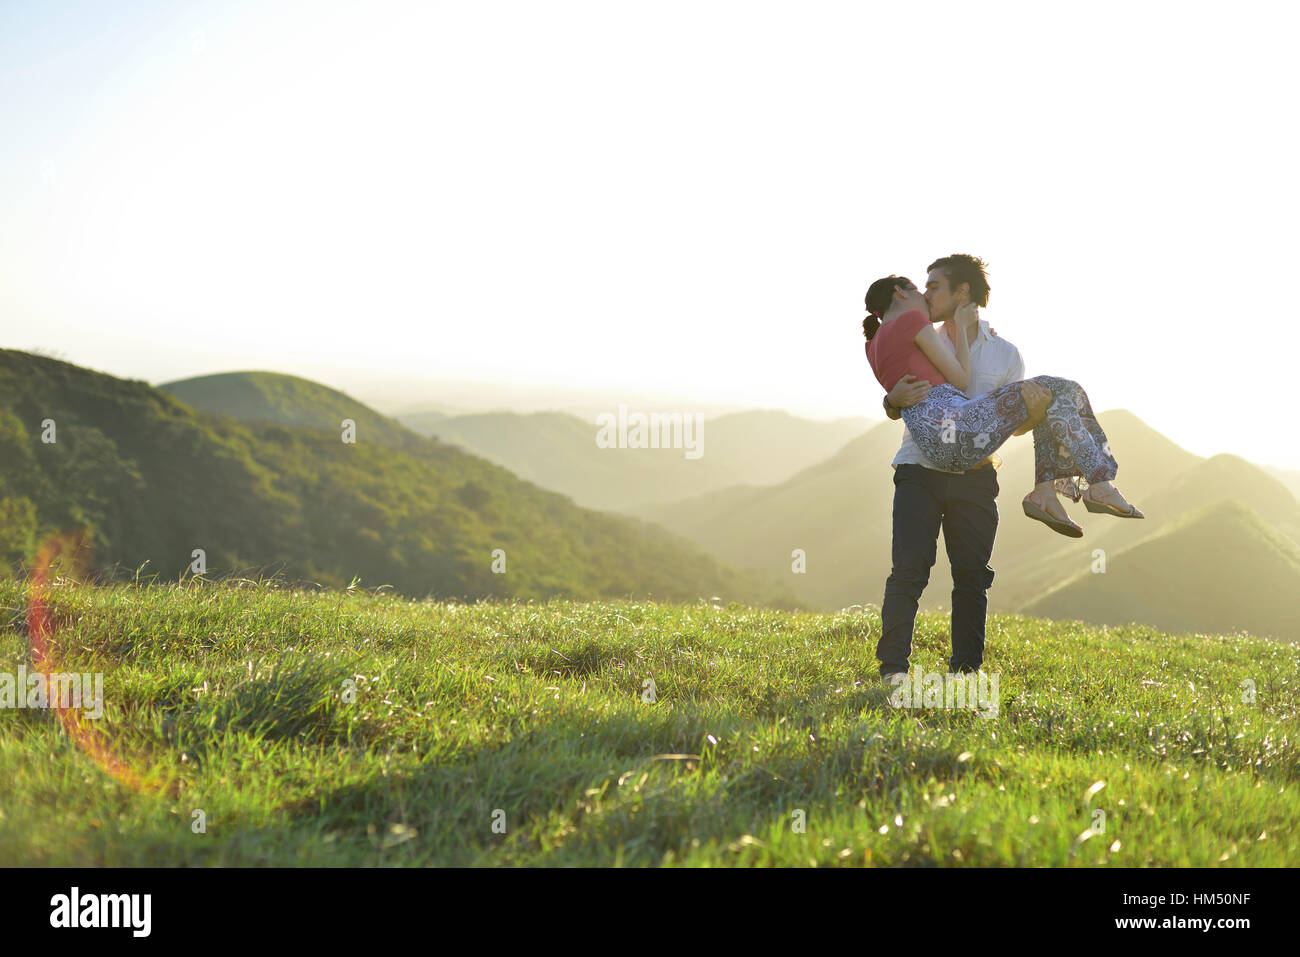 guy kissing girl on hands in summer green grass Stock Photo